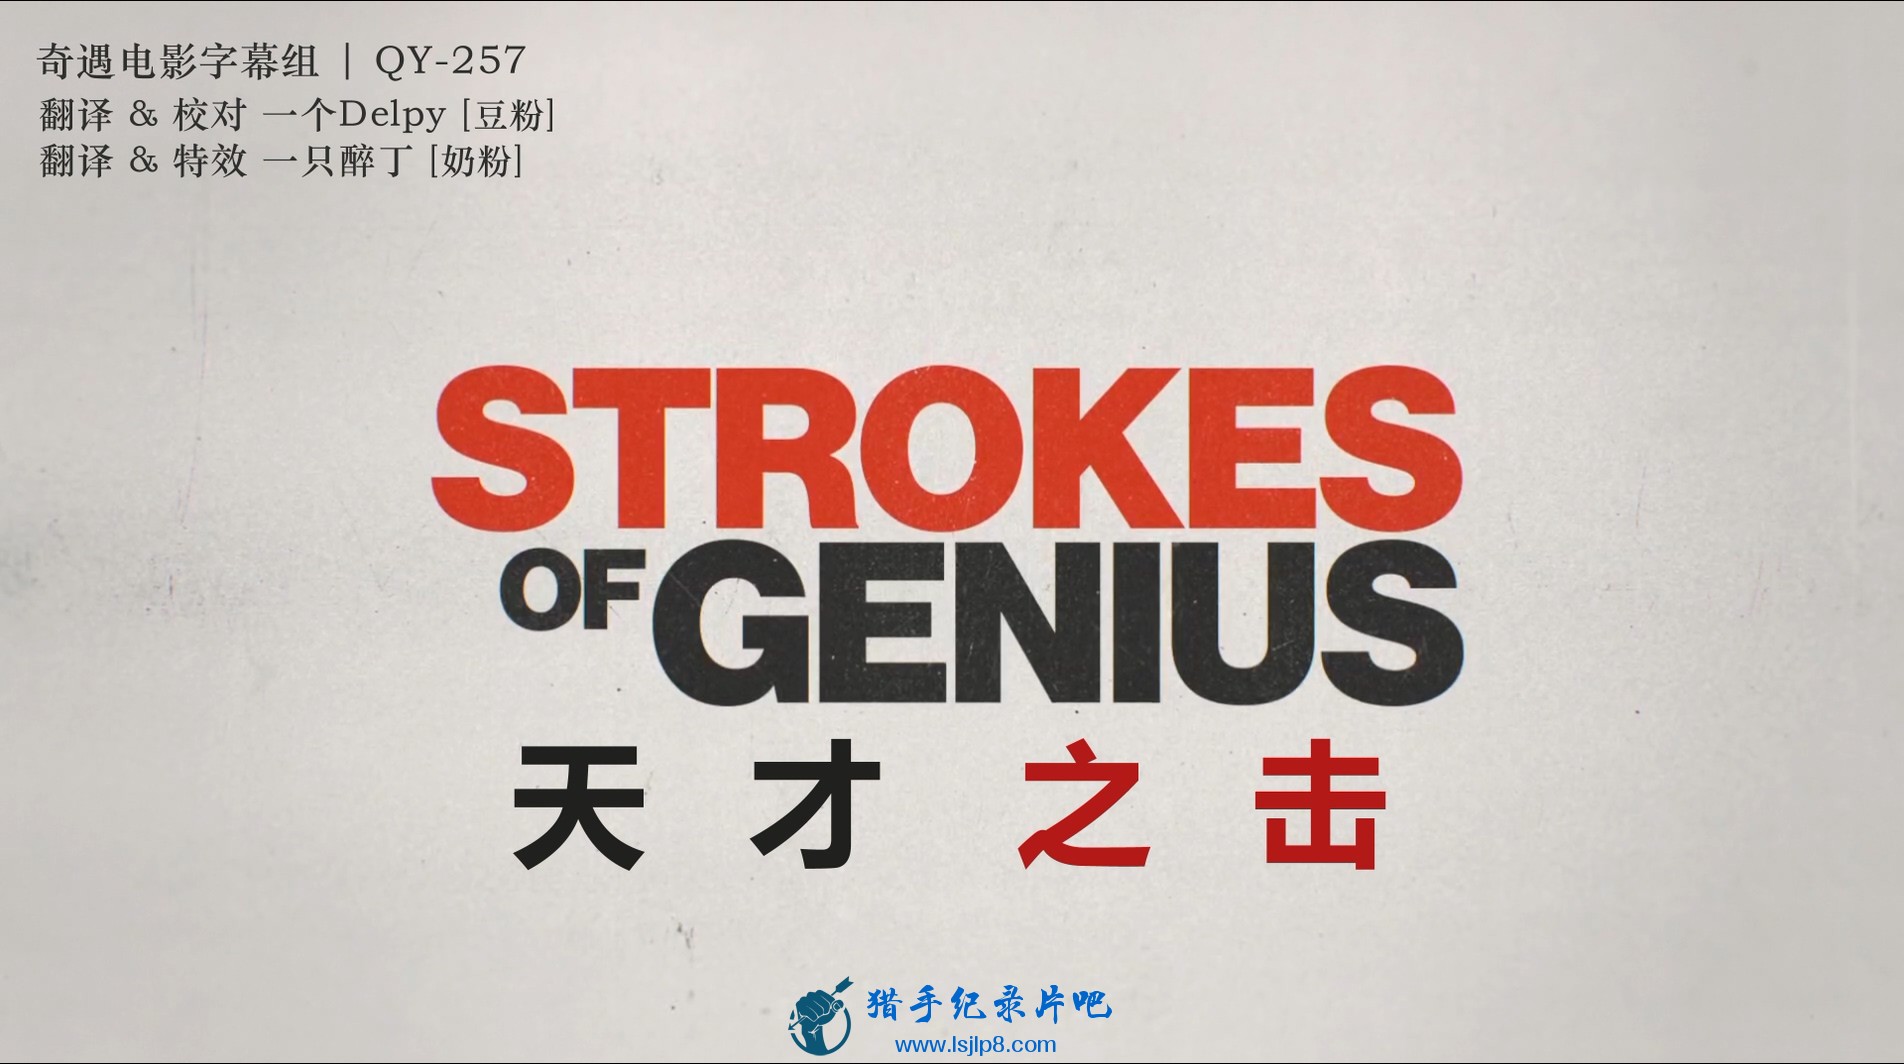 Strokes.of.Genius.2018.1080p.WEB-DL.DD5.1.H.264-EYEZ.mkv_20200312_110839.284.jpg